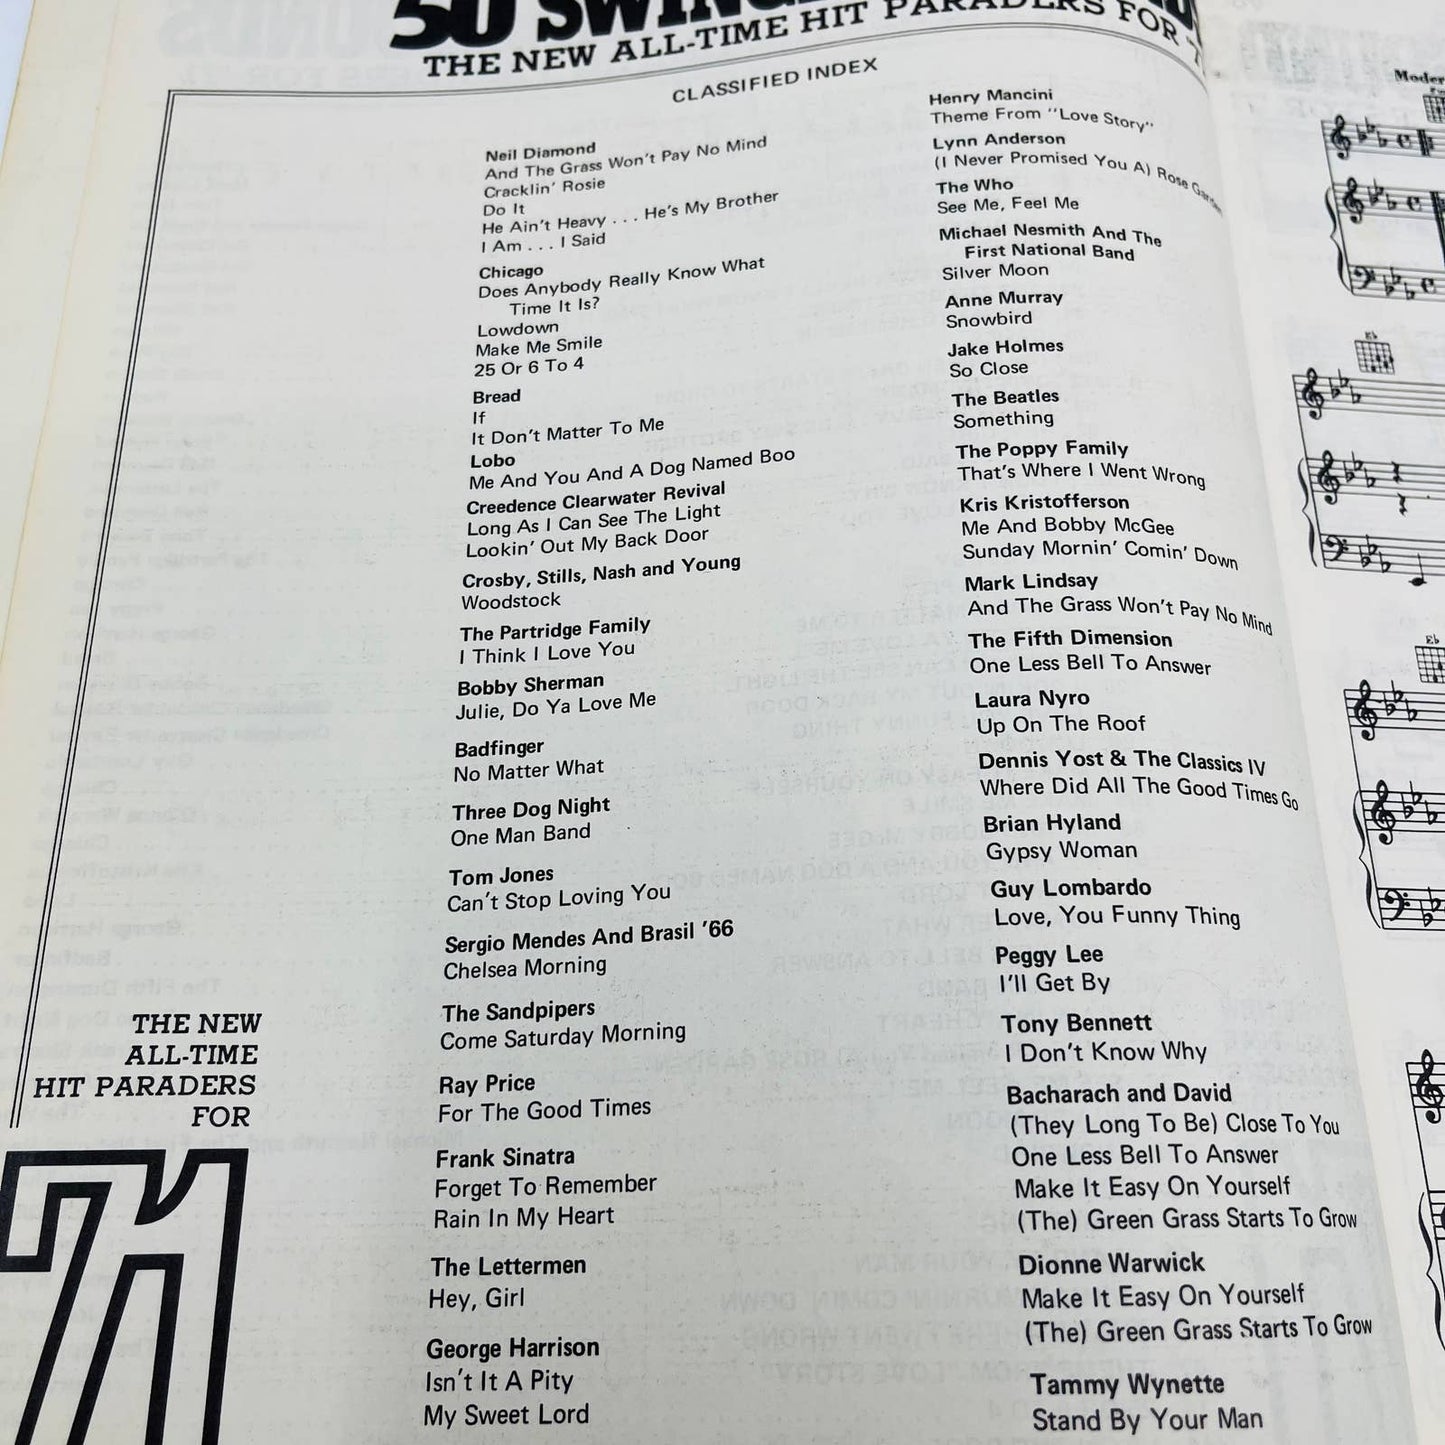 1971 Hit Parader 50 Swinging Sounds Sheet Music Book George Harrison CCR BA4